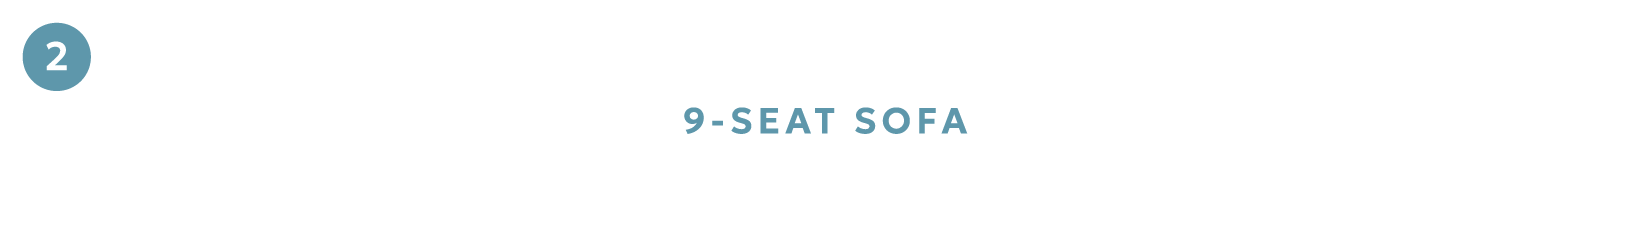 9-SEAT SOFA